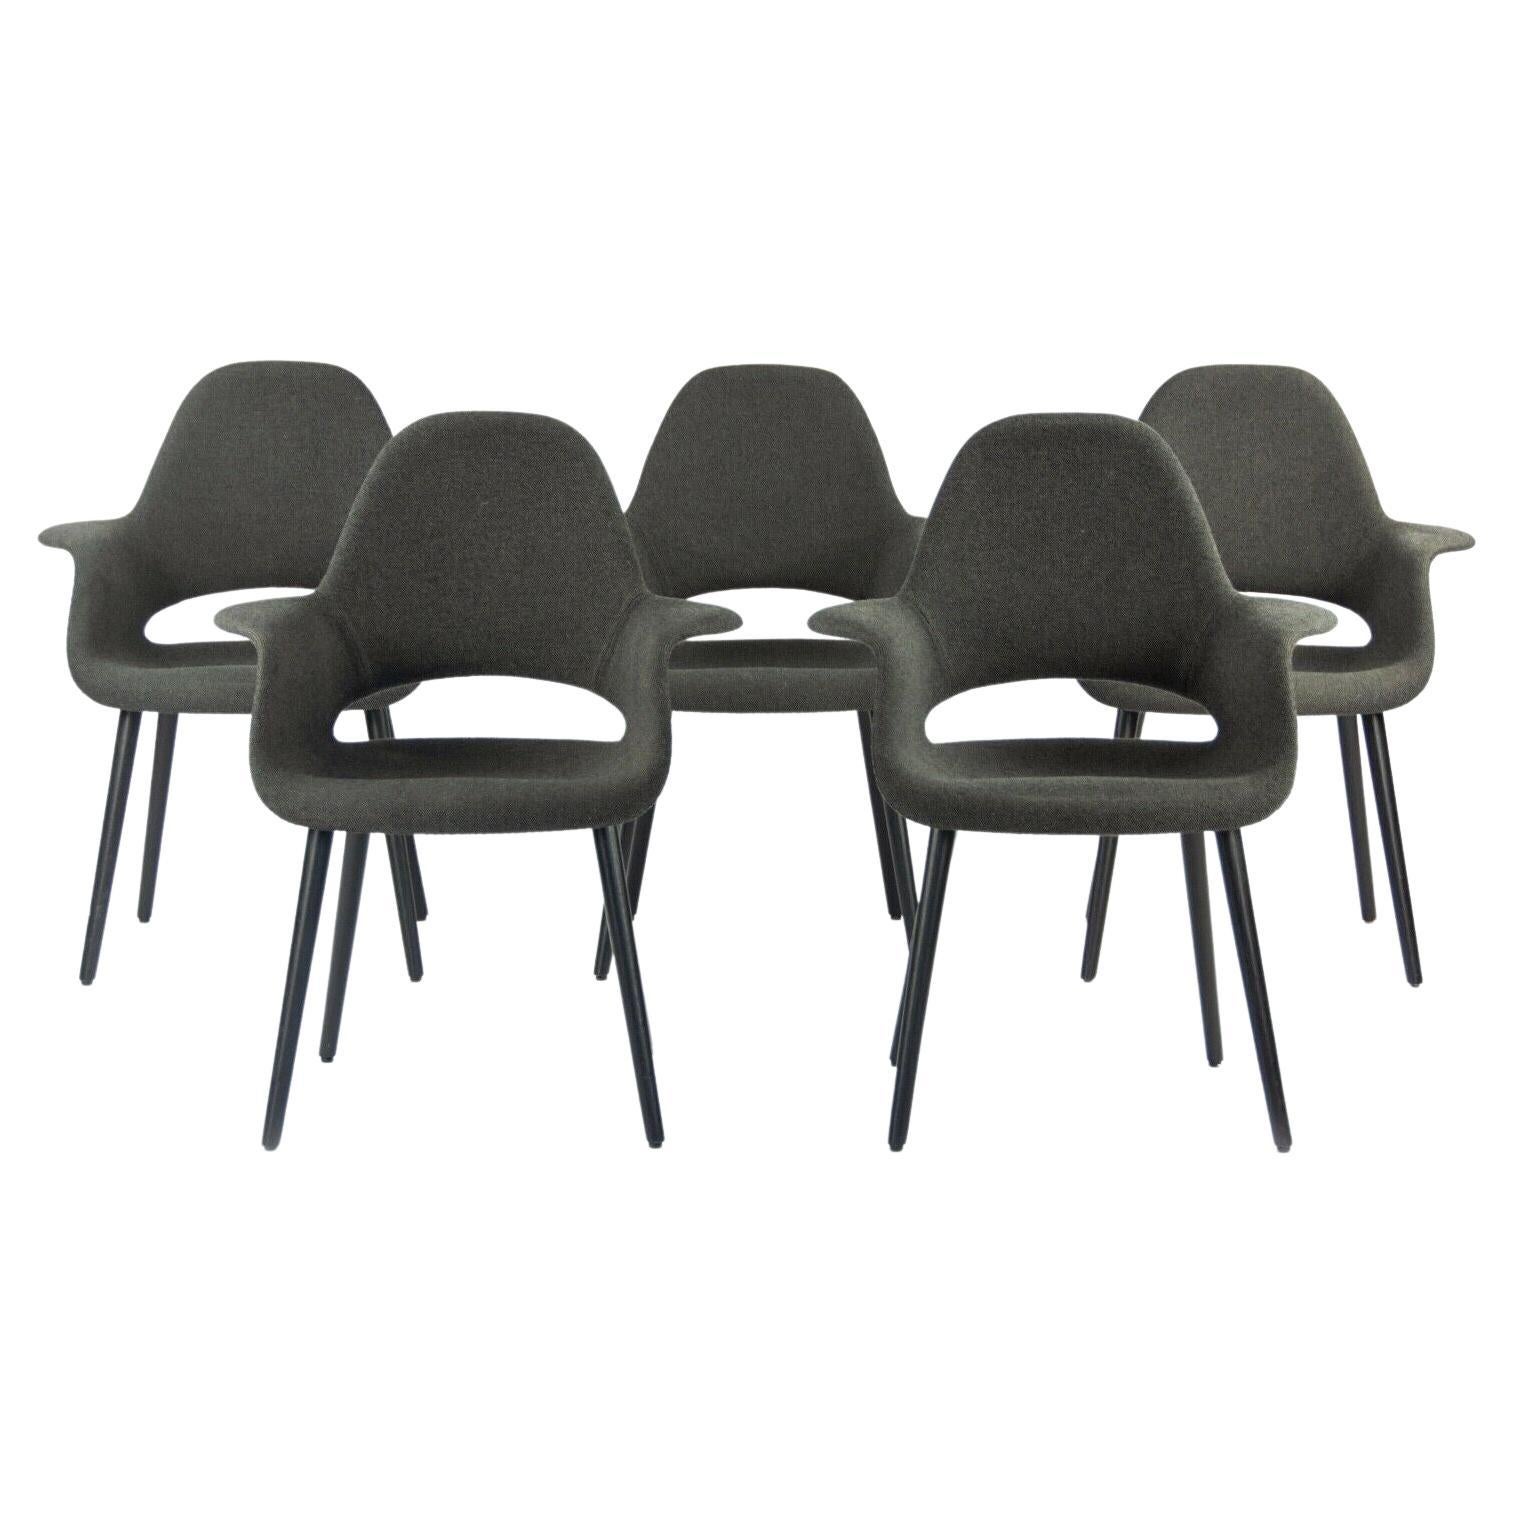 2010s Charles Eames & Eero Saarinen Organic Chairs by Vitra in Dark Gray Fabric For Sale